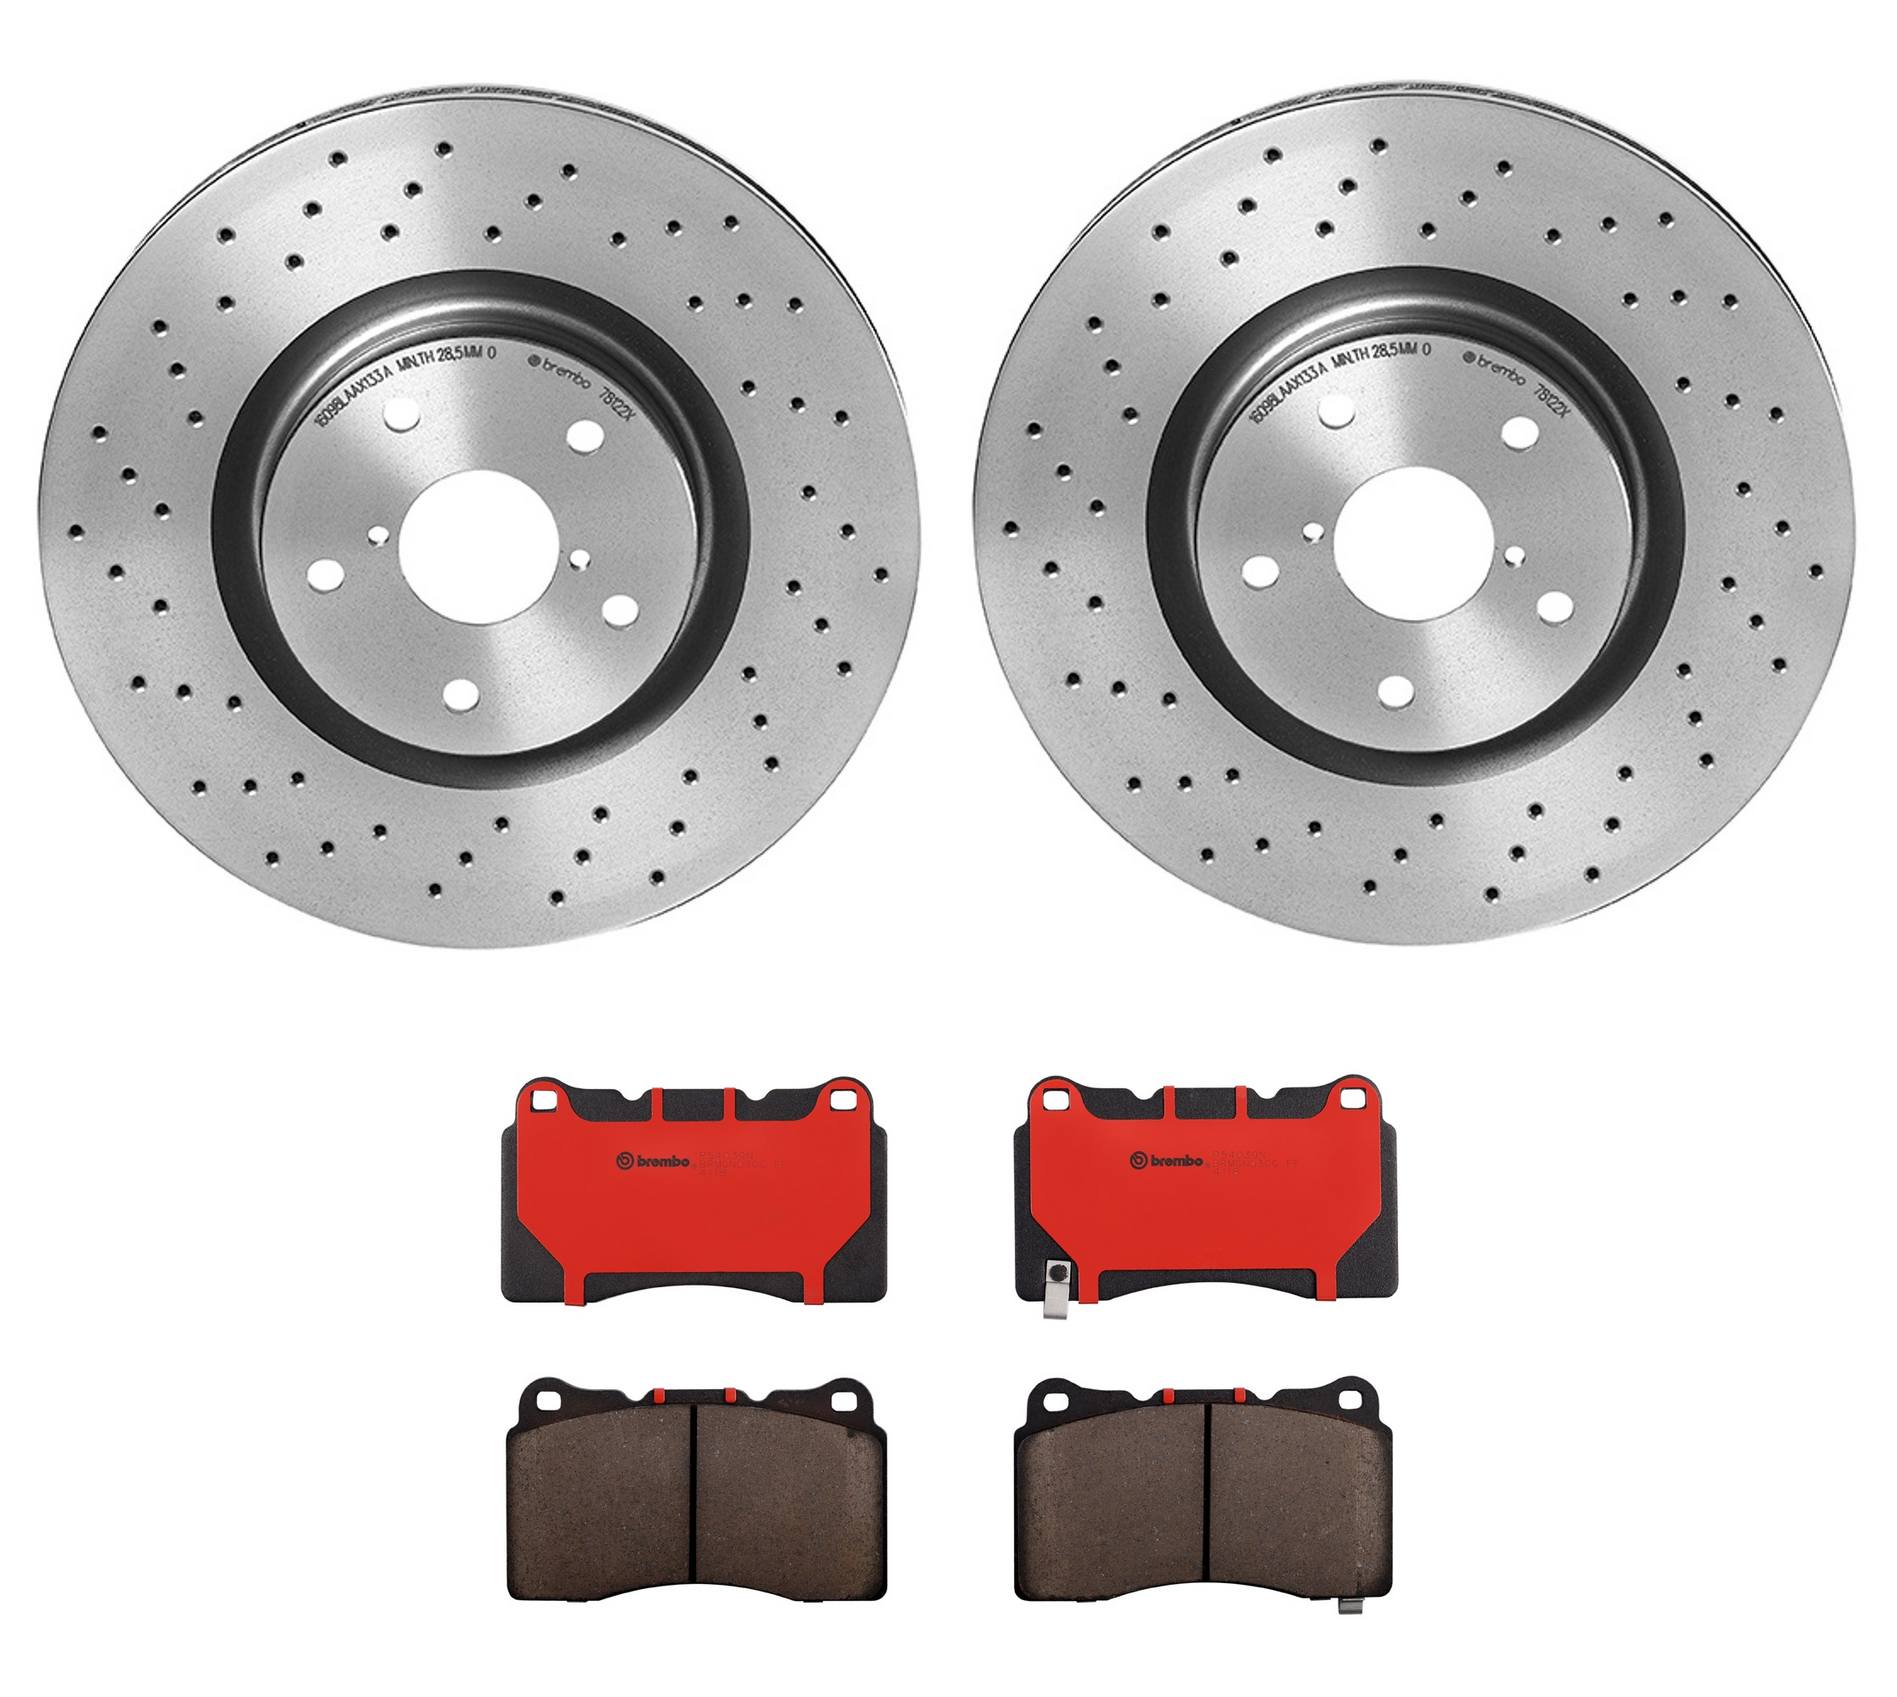 https://storage.googleapis.com/part-image/Images/Brembo/disc-brake-pad-and-rotor-kit/KTX0009.jpg